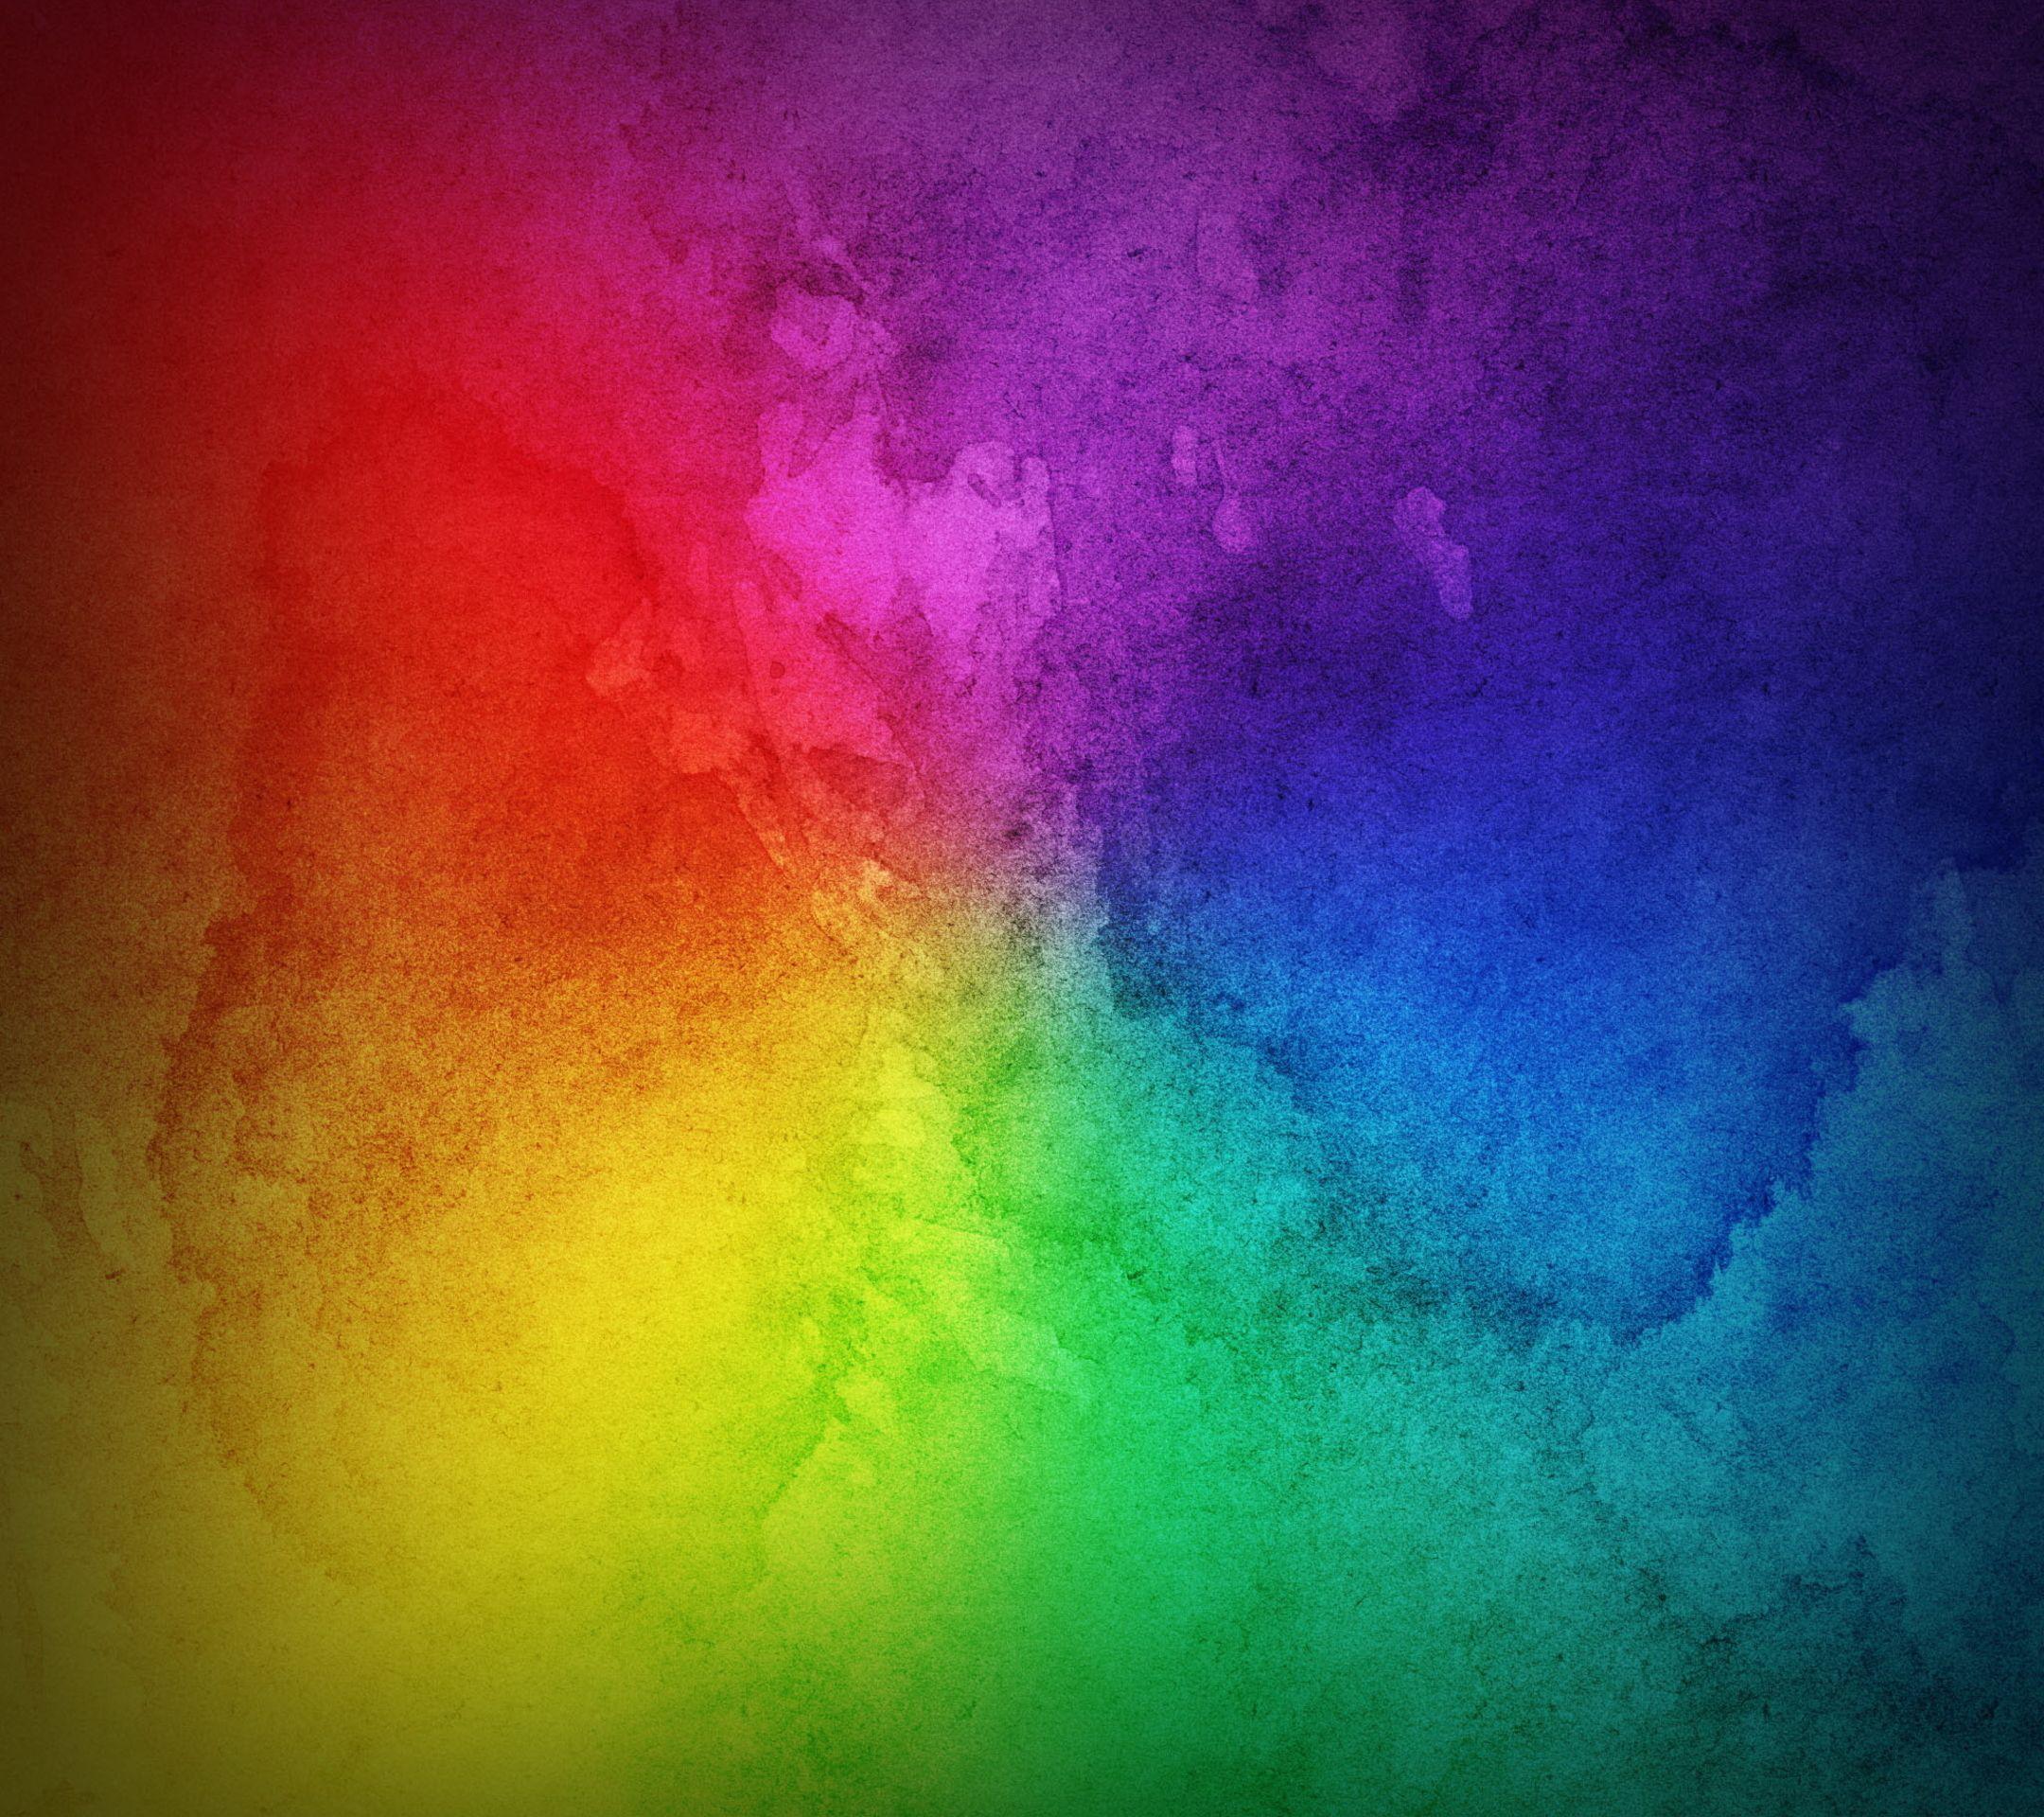 My Galaxy S4 Wallpaper one I just liked!. Rainbow wallpaper, Pattern wallpaper, iPad image